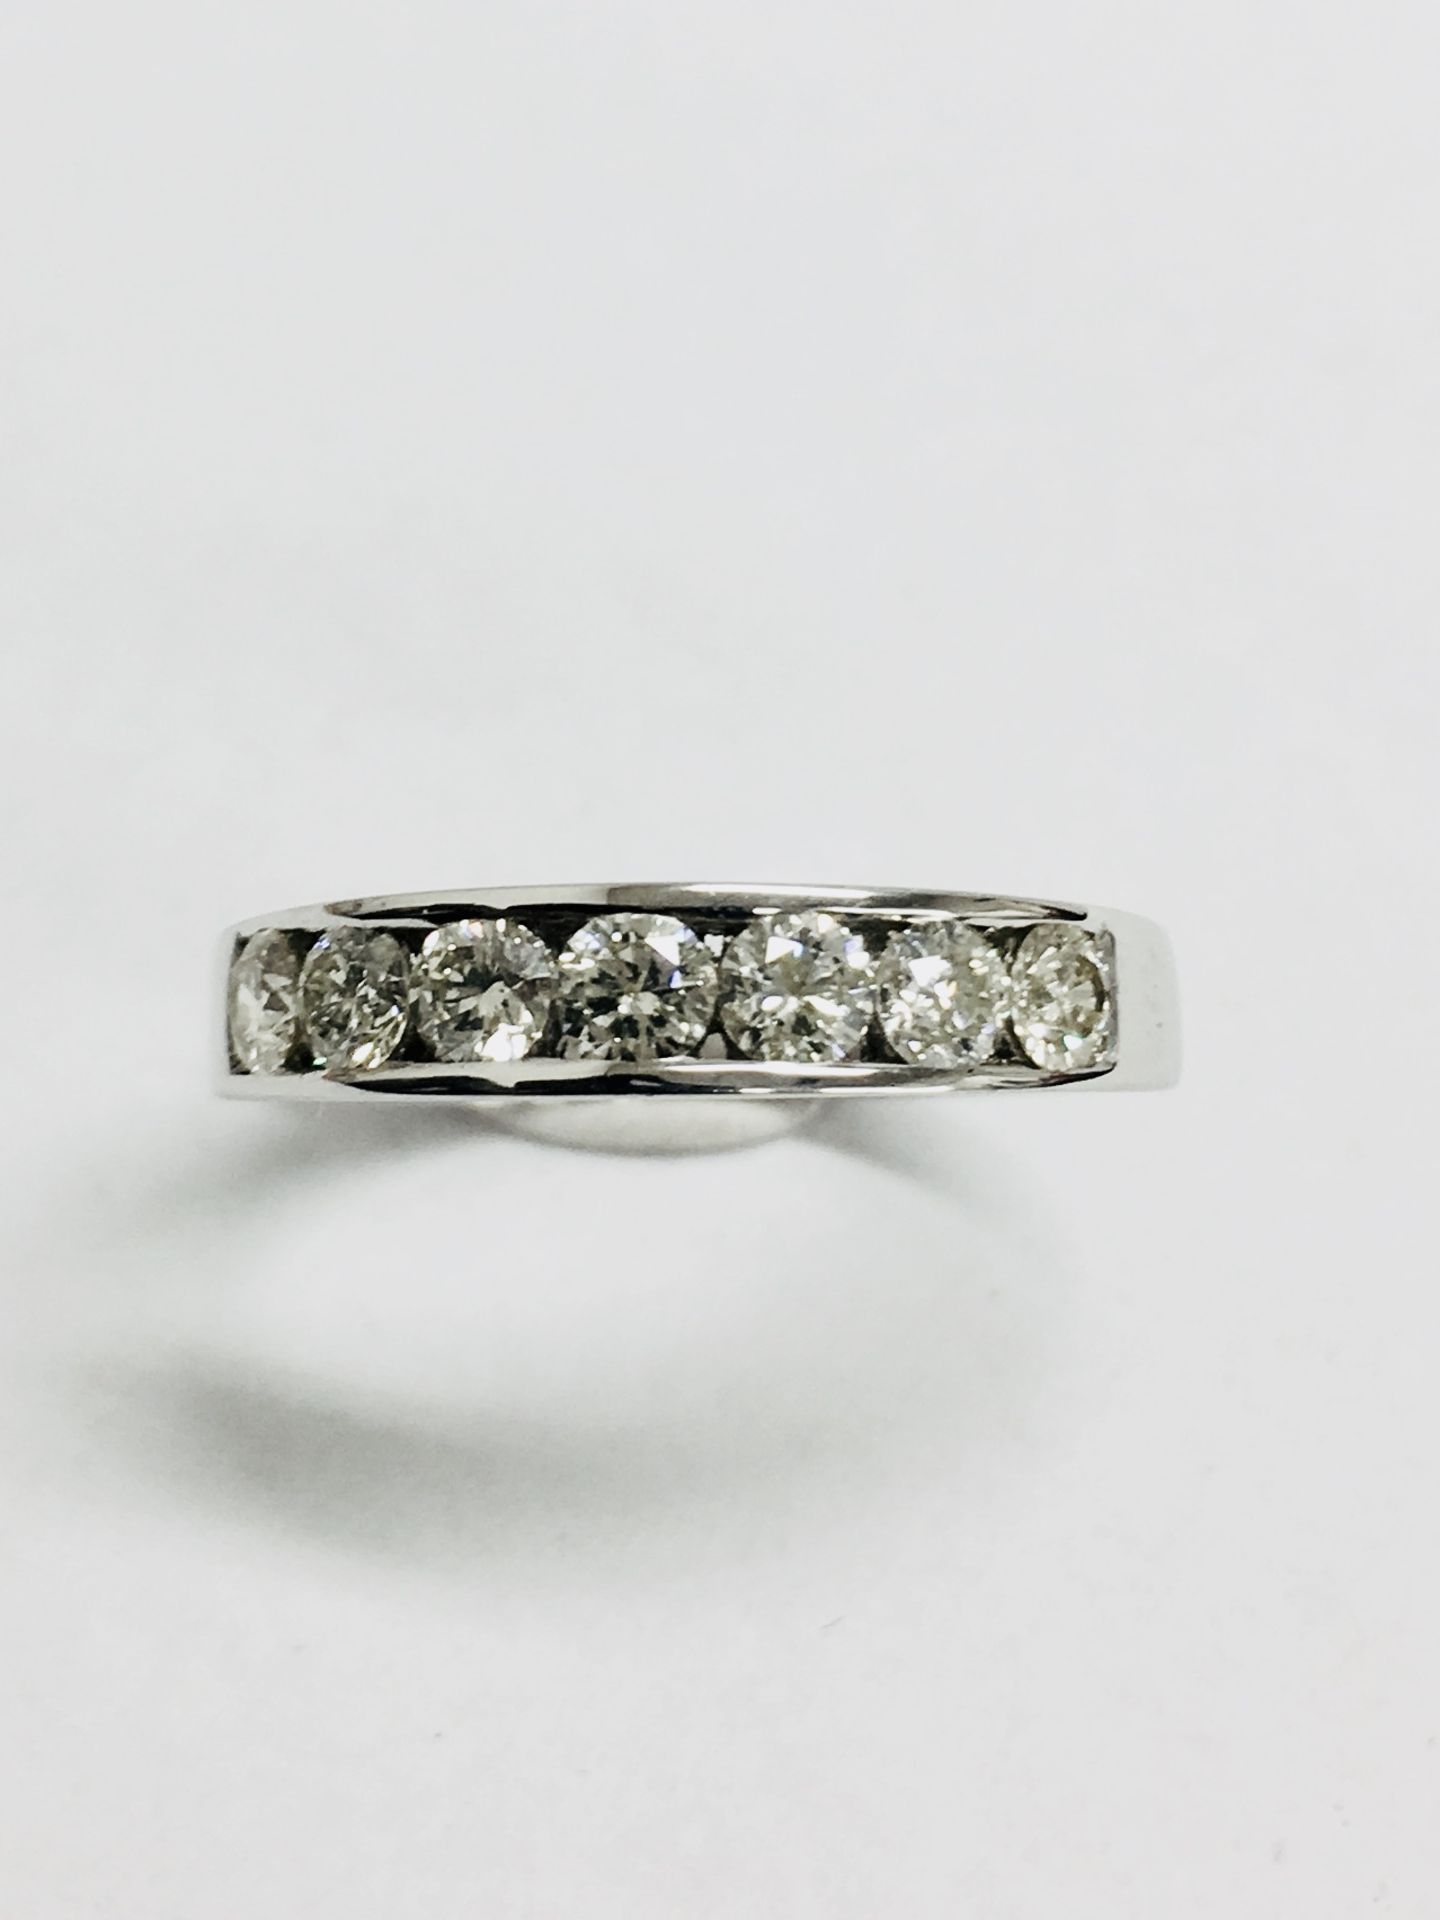 0.70ct diamond eternity style band ring. Set with 7 brilliant cut diamonds